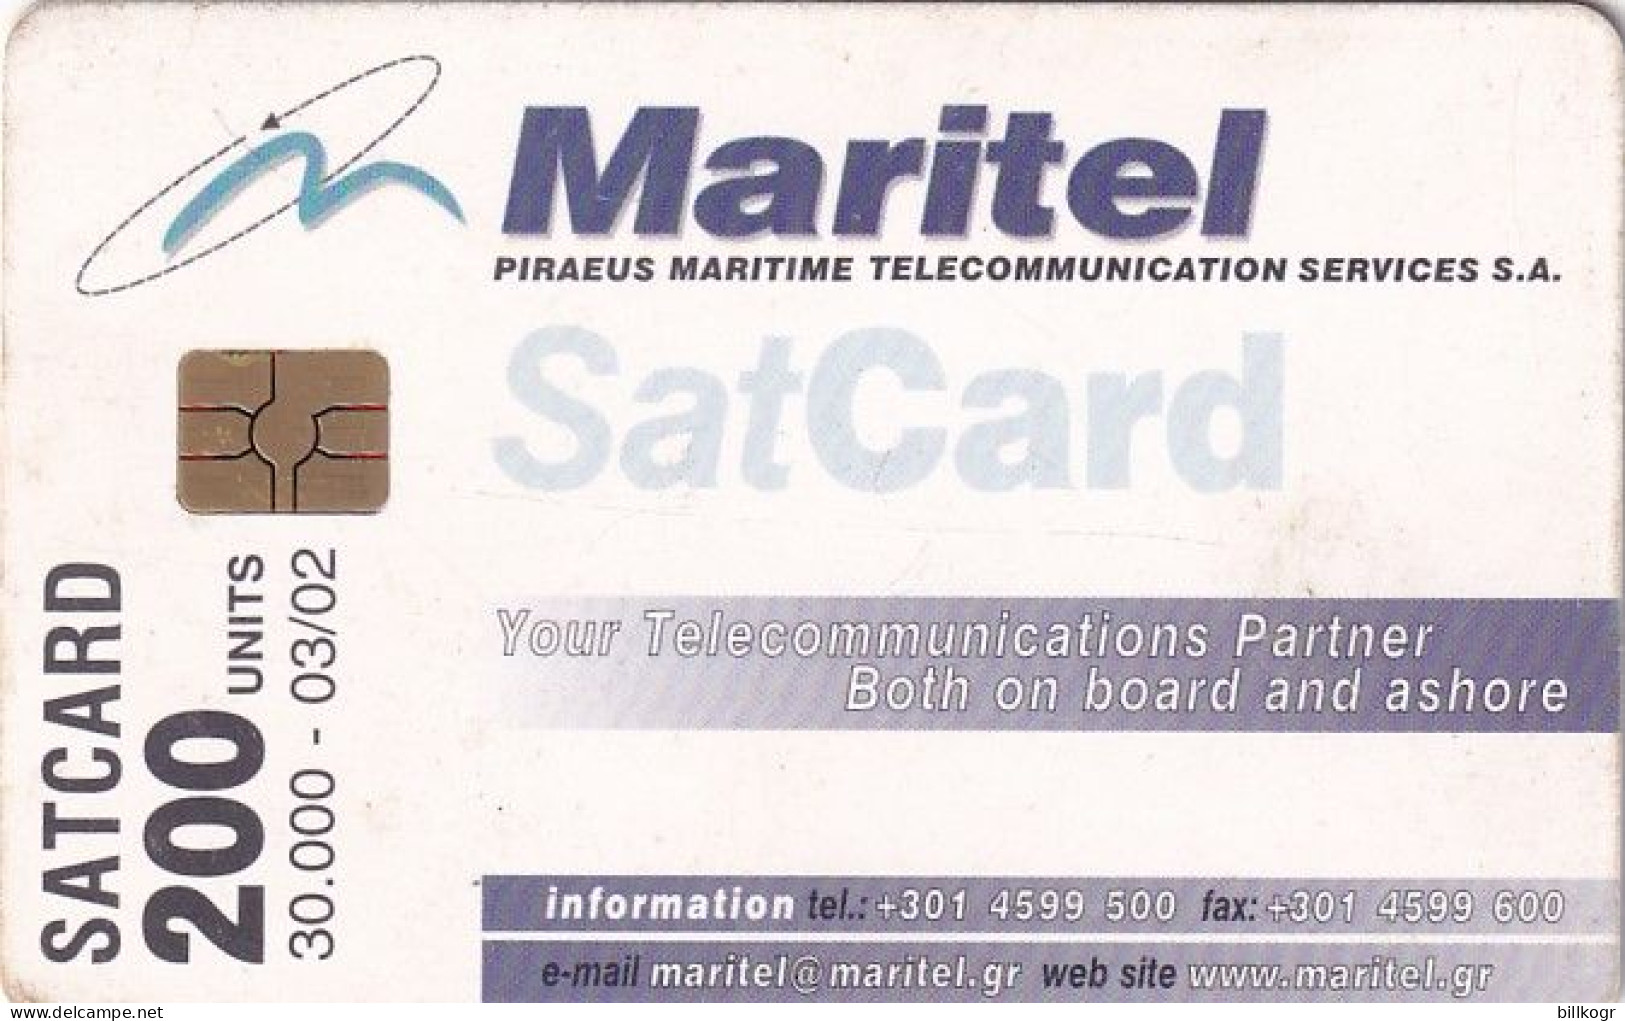 GREECE - Maritel Satellite Card 200 Units, Tirage 30000, 03/02, Used - Griechenland